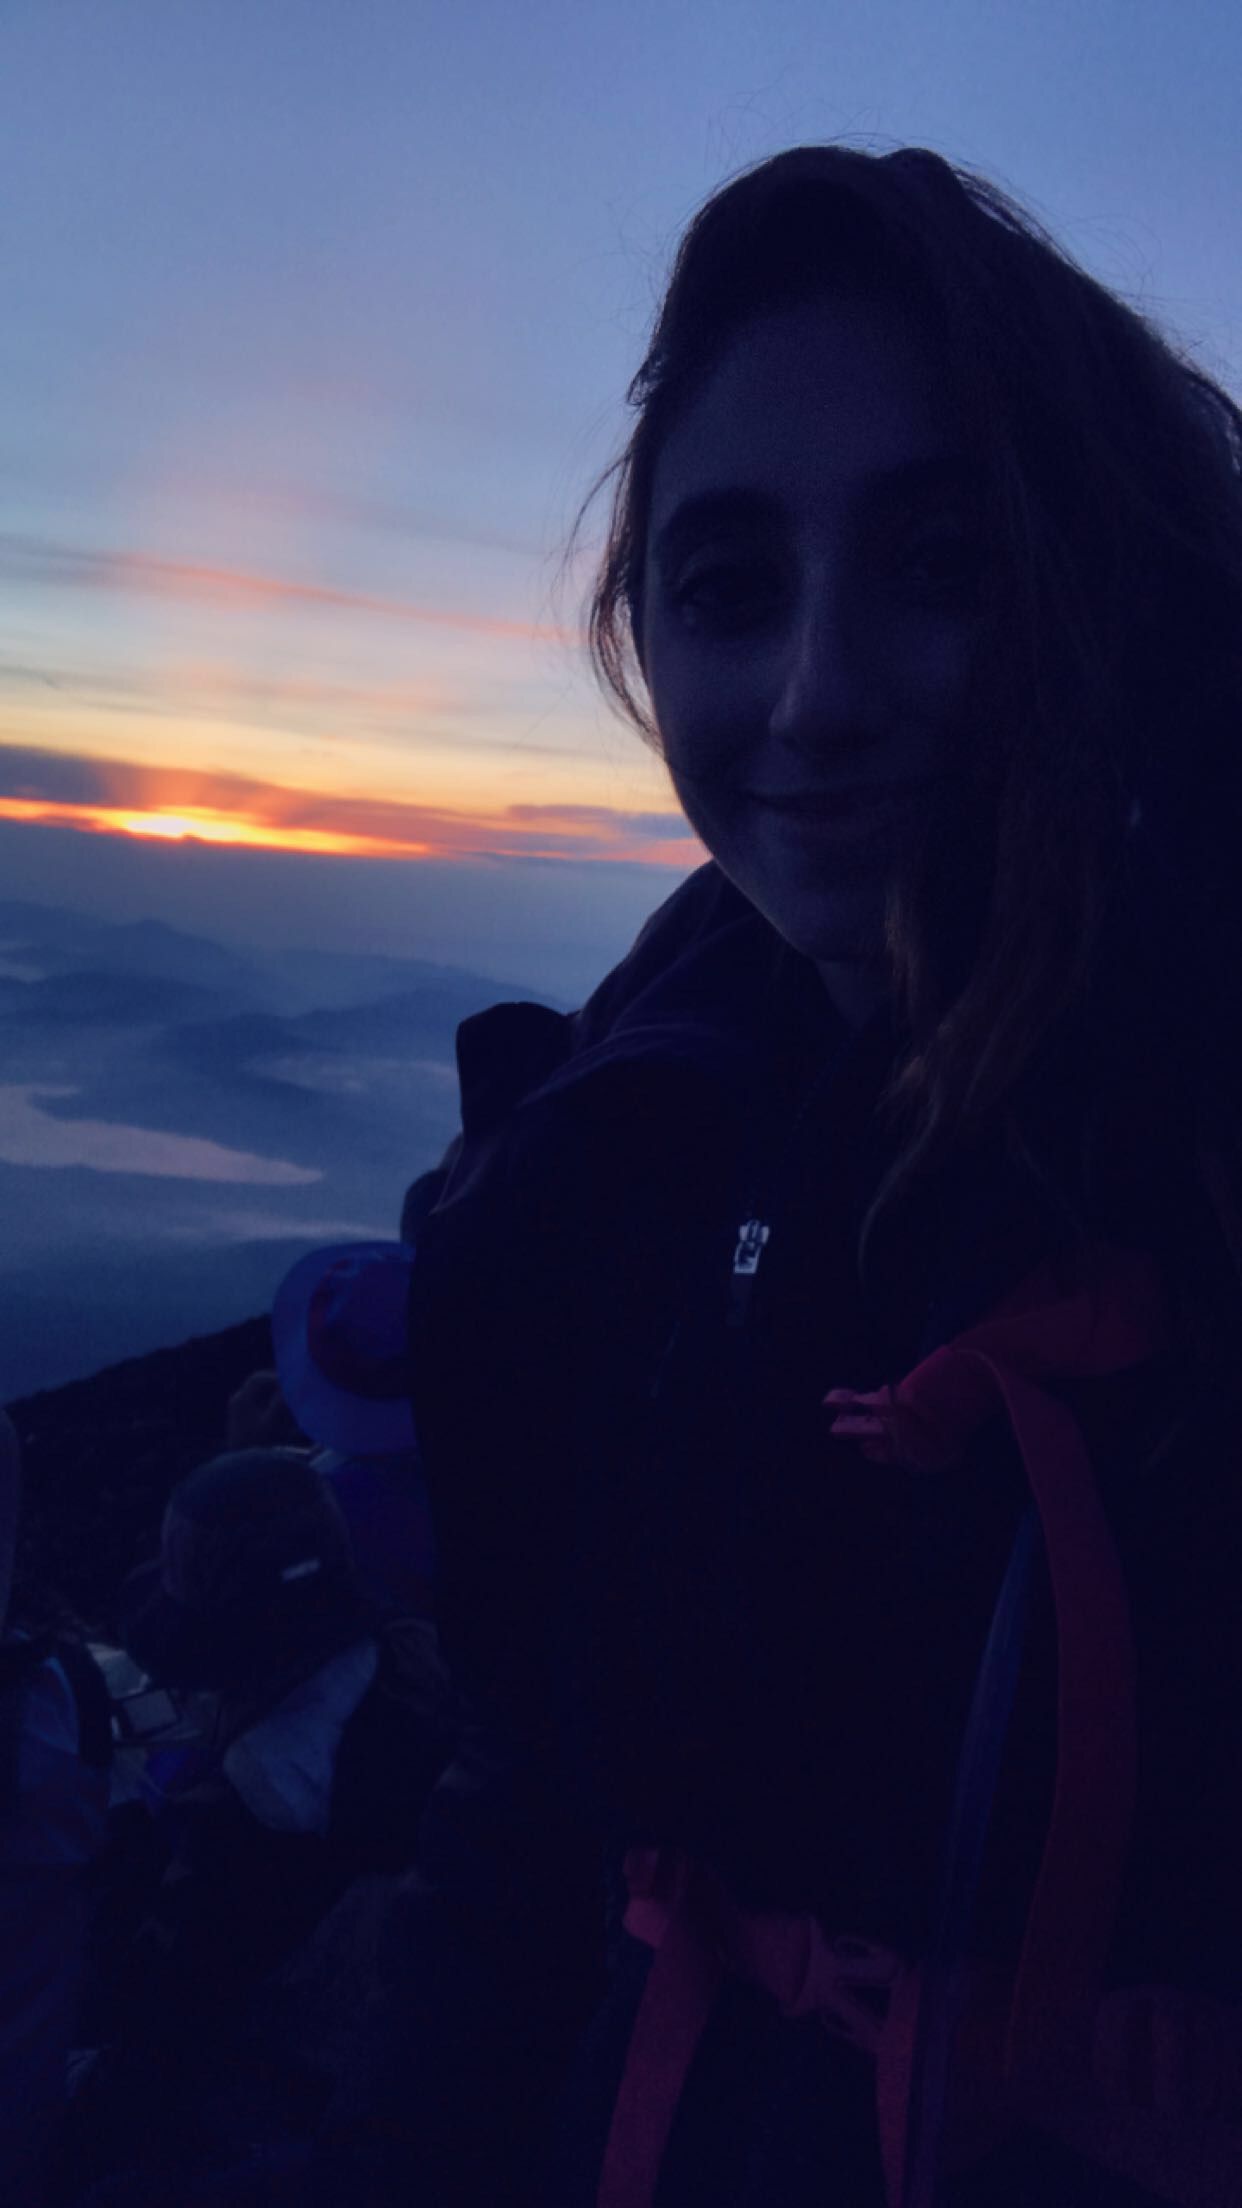 Sunrise at the top of Mount Fuji